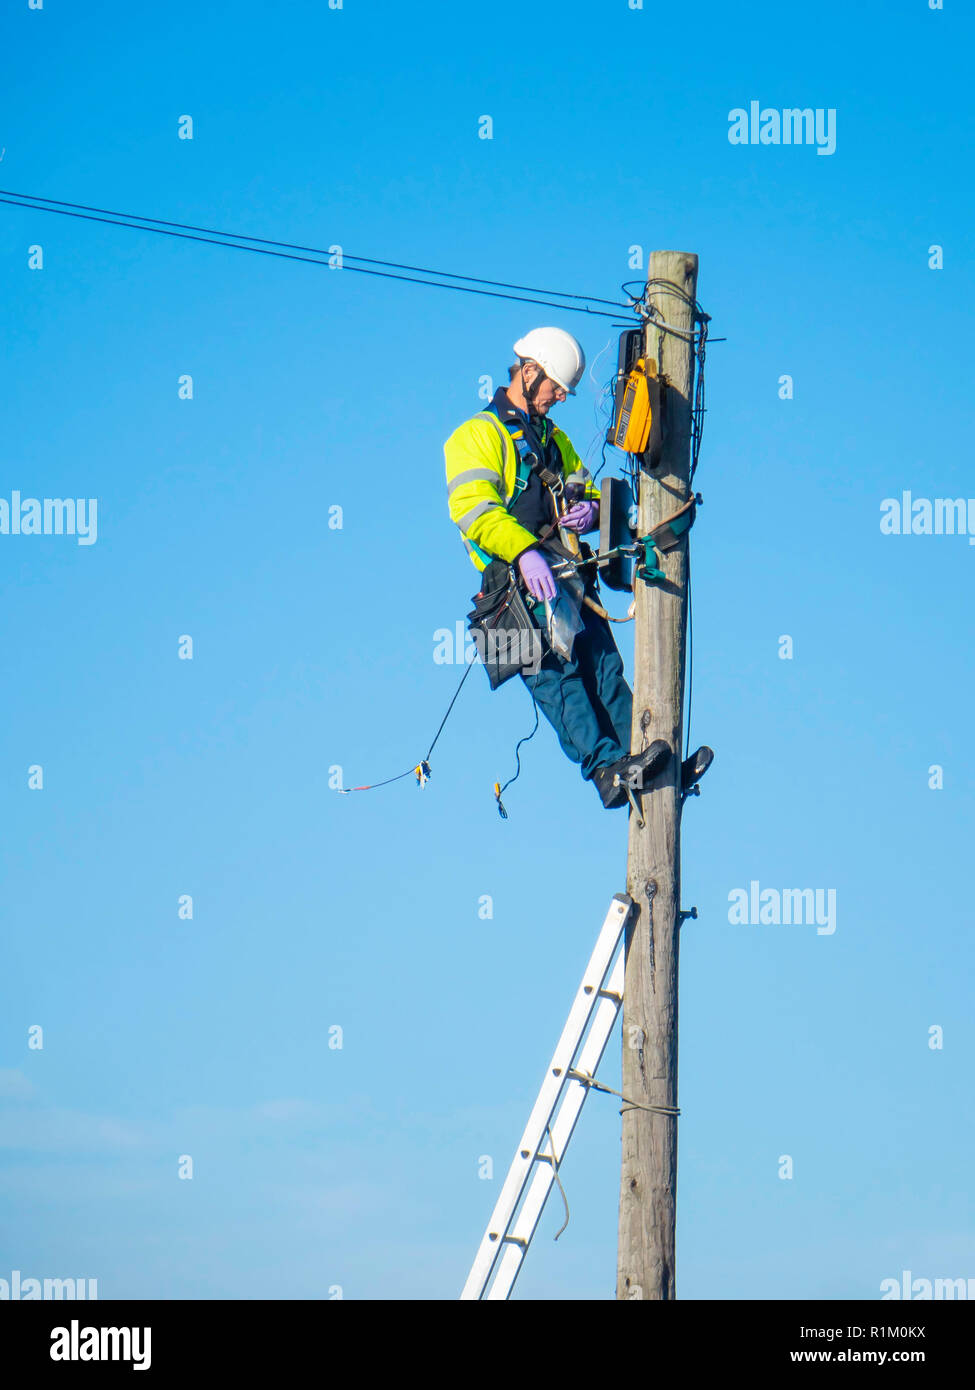 BT Openreach Broadband telecommunications technician working on equipment mounted on a wooden pole Stock Photo